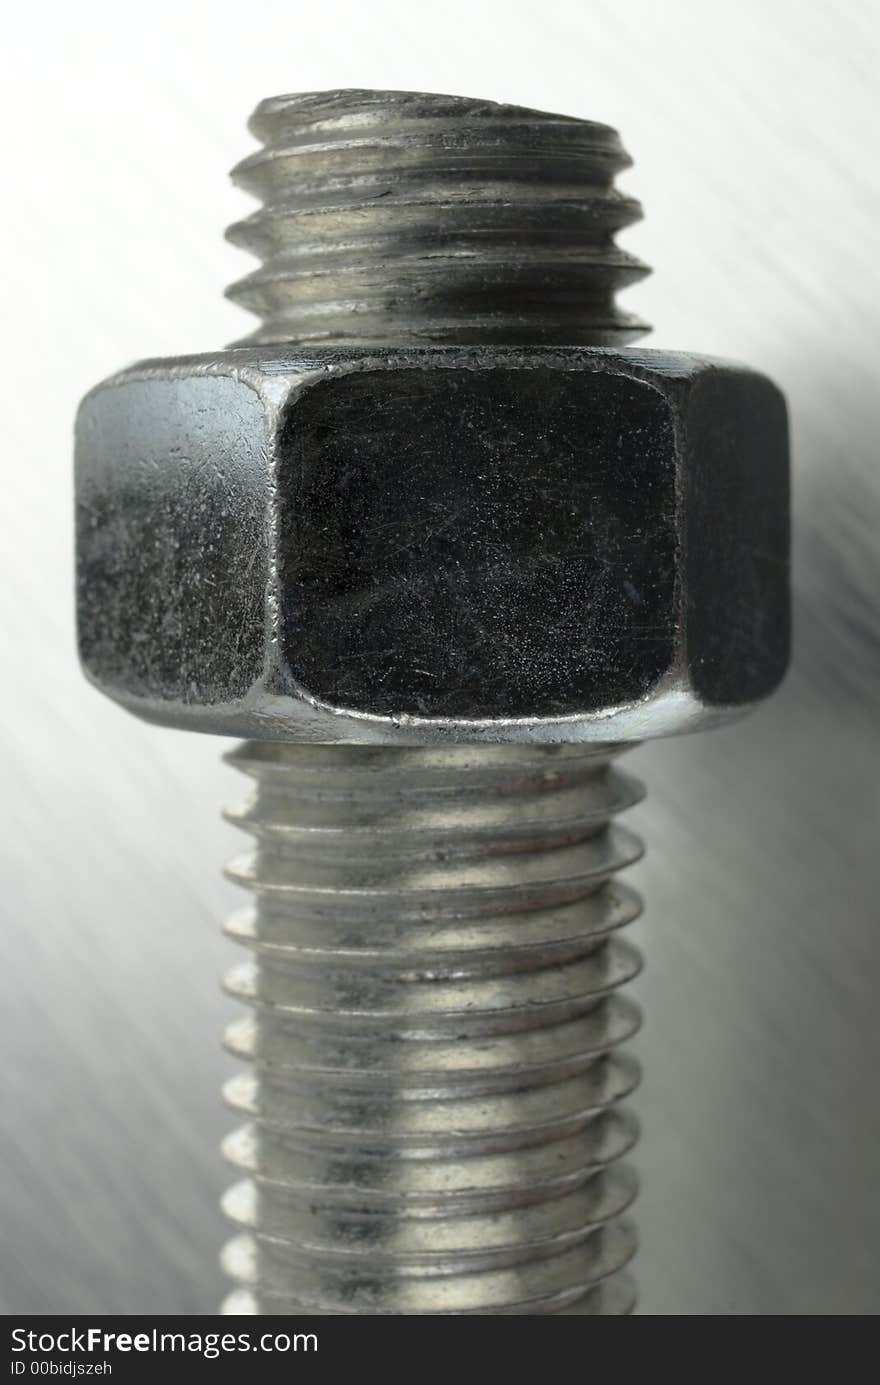 Closeup image of a nut and bolt.